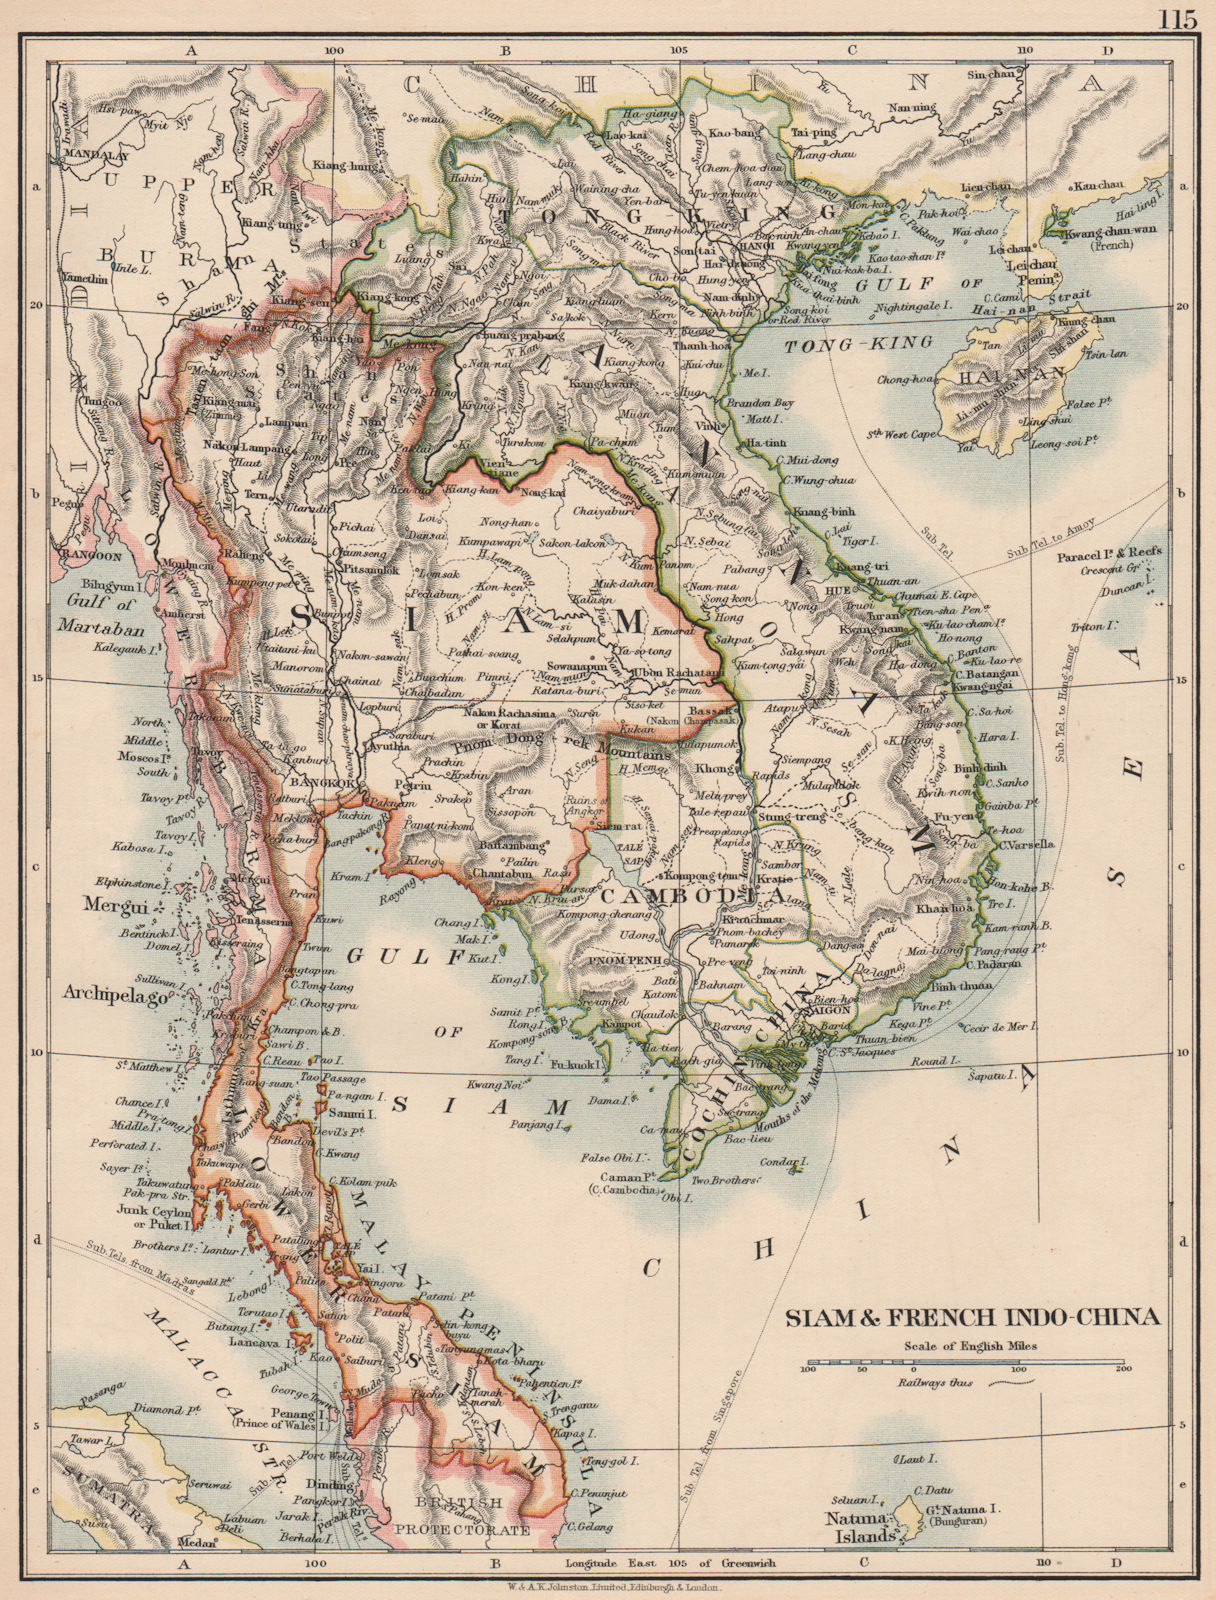 INDOCHINA. Siam Burma French IC. Cambodia Anam Tong-King Cochinchina 1906 map